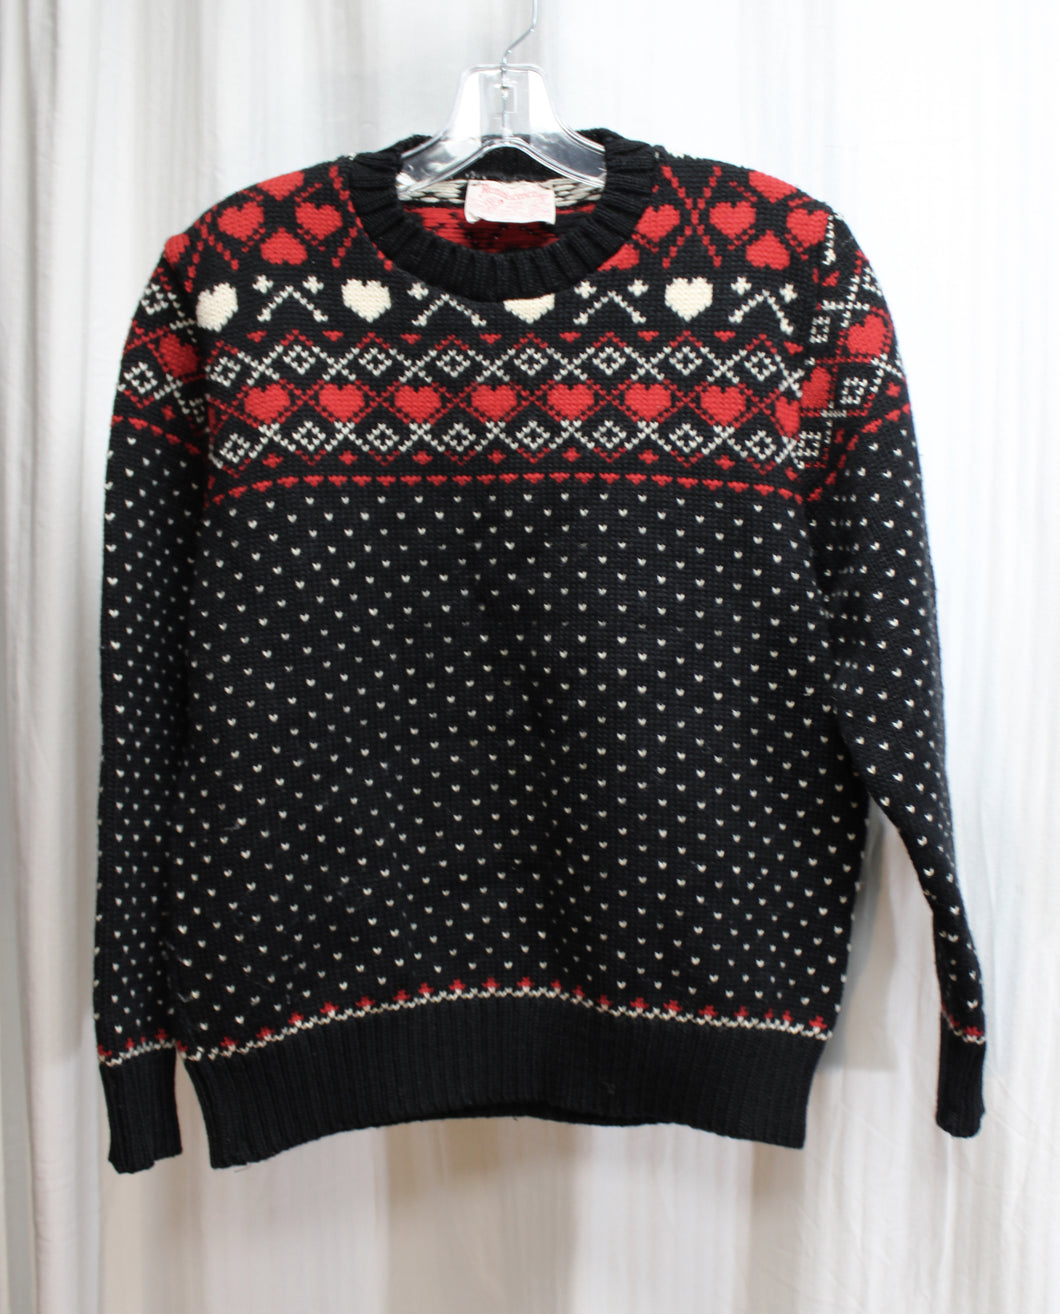 Vintage - Reminiscence by Stewart Richer - 100% Wool, Black, White & Red Heart Motif Fair Isle Sweater - Size M